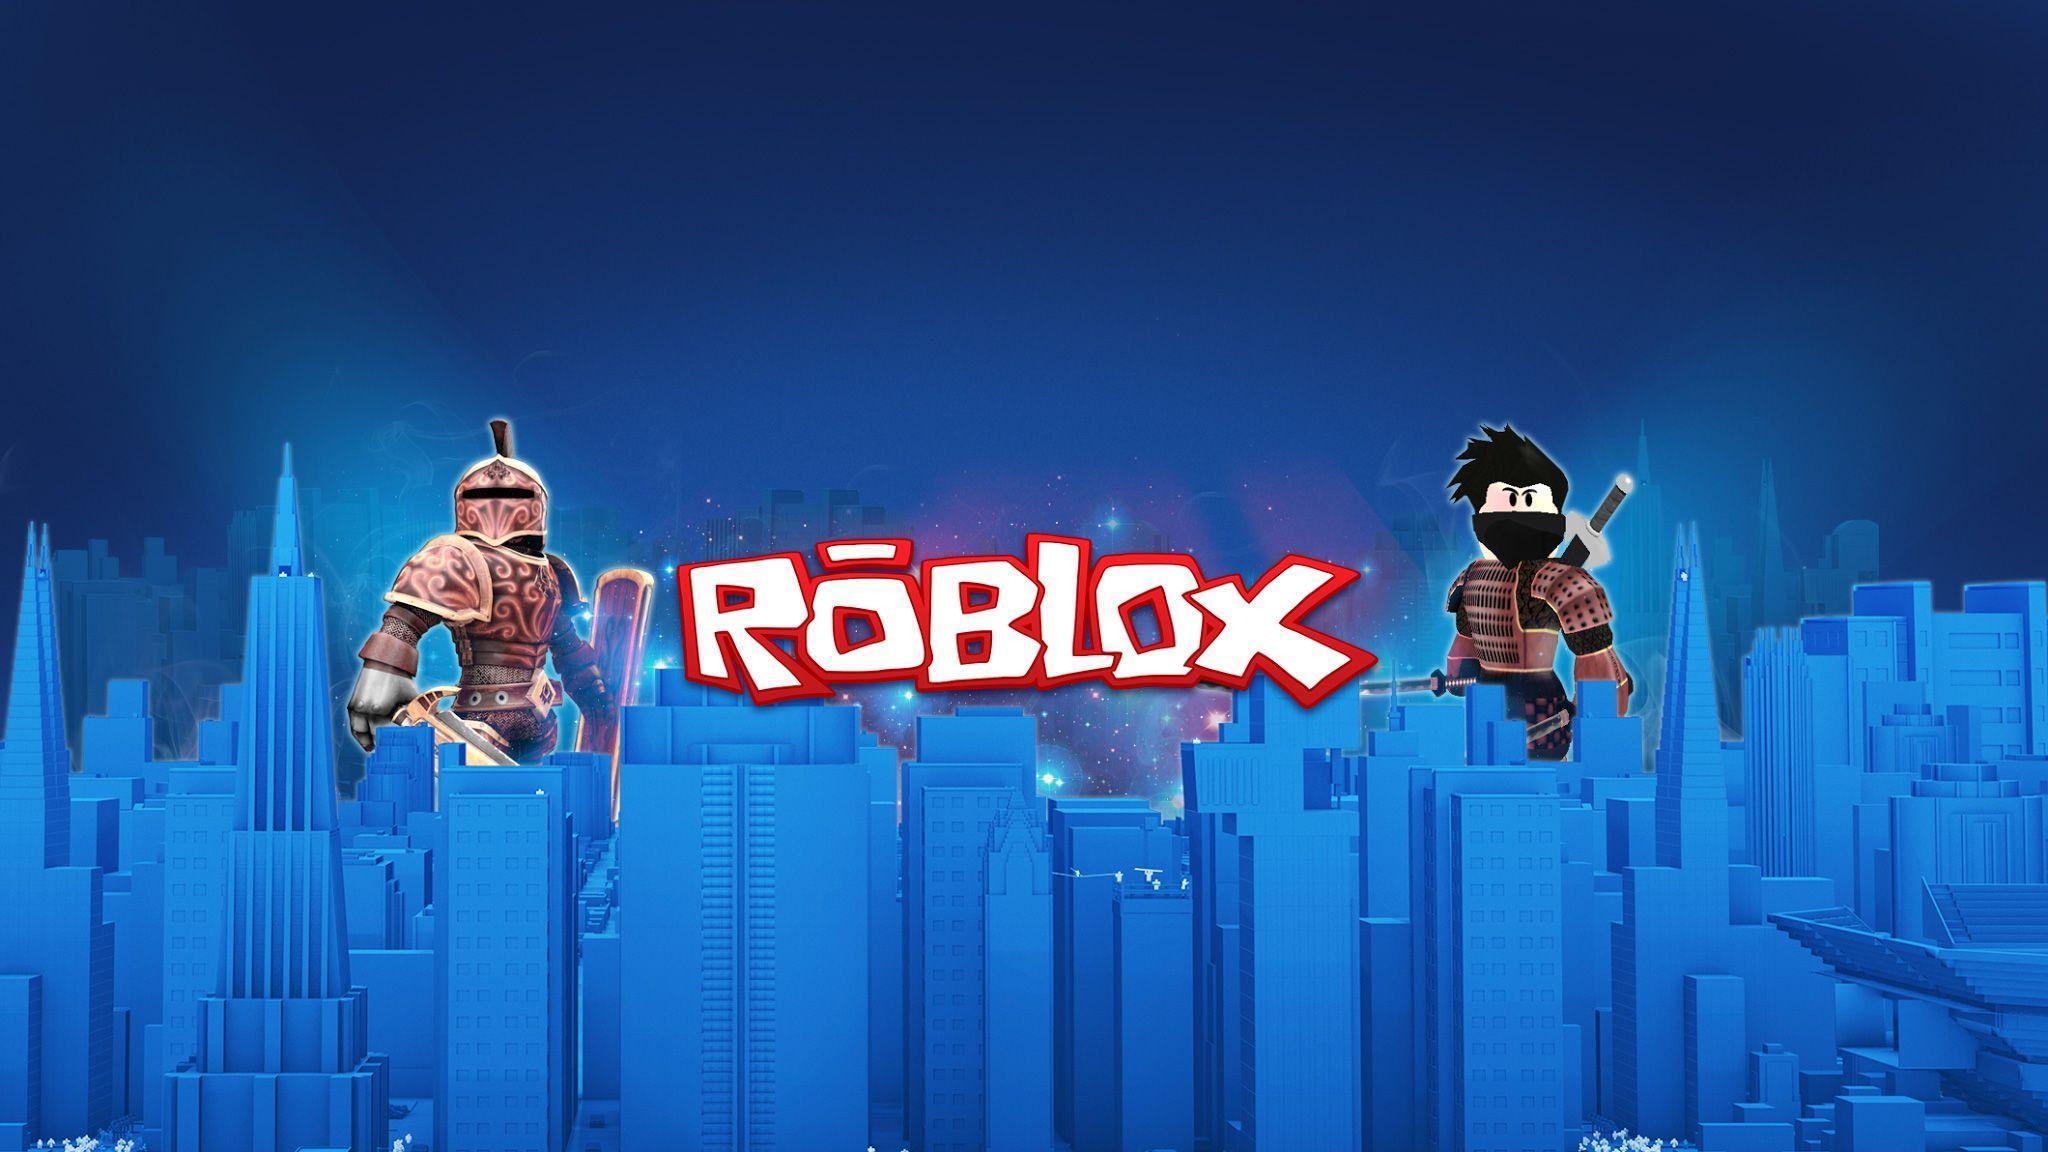 Rblx Roblox Tomwhite2010 Com - roblox rpdr song id